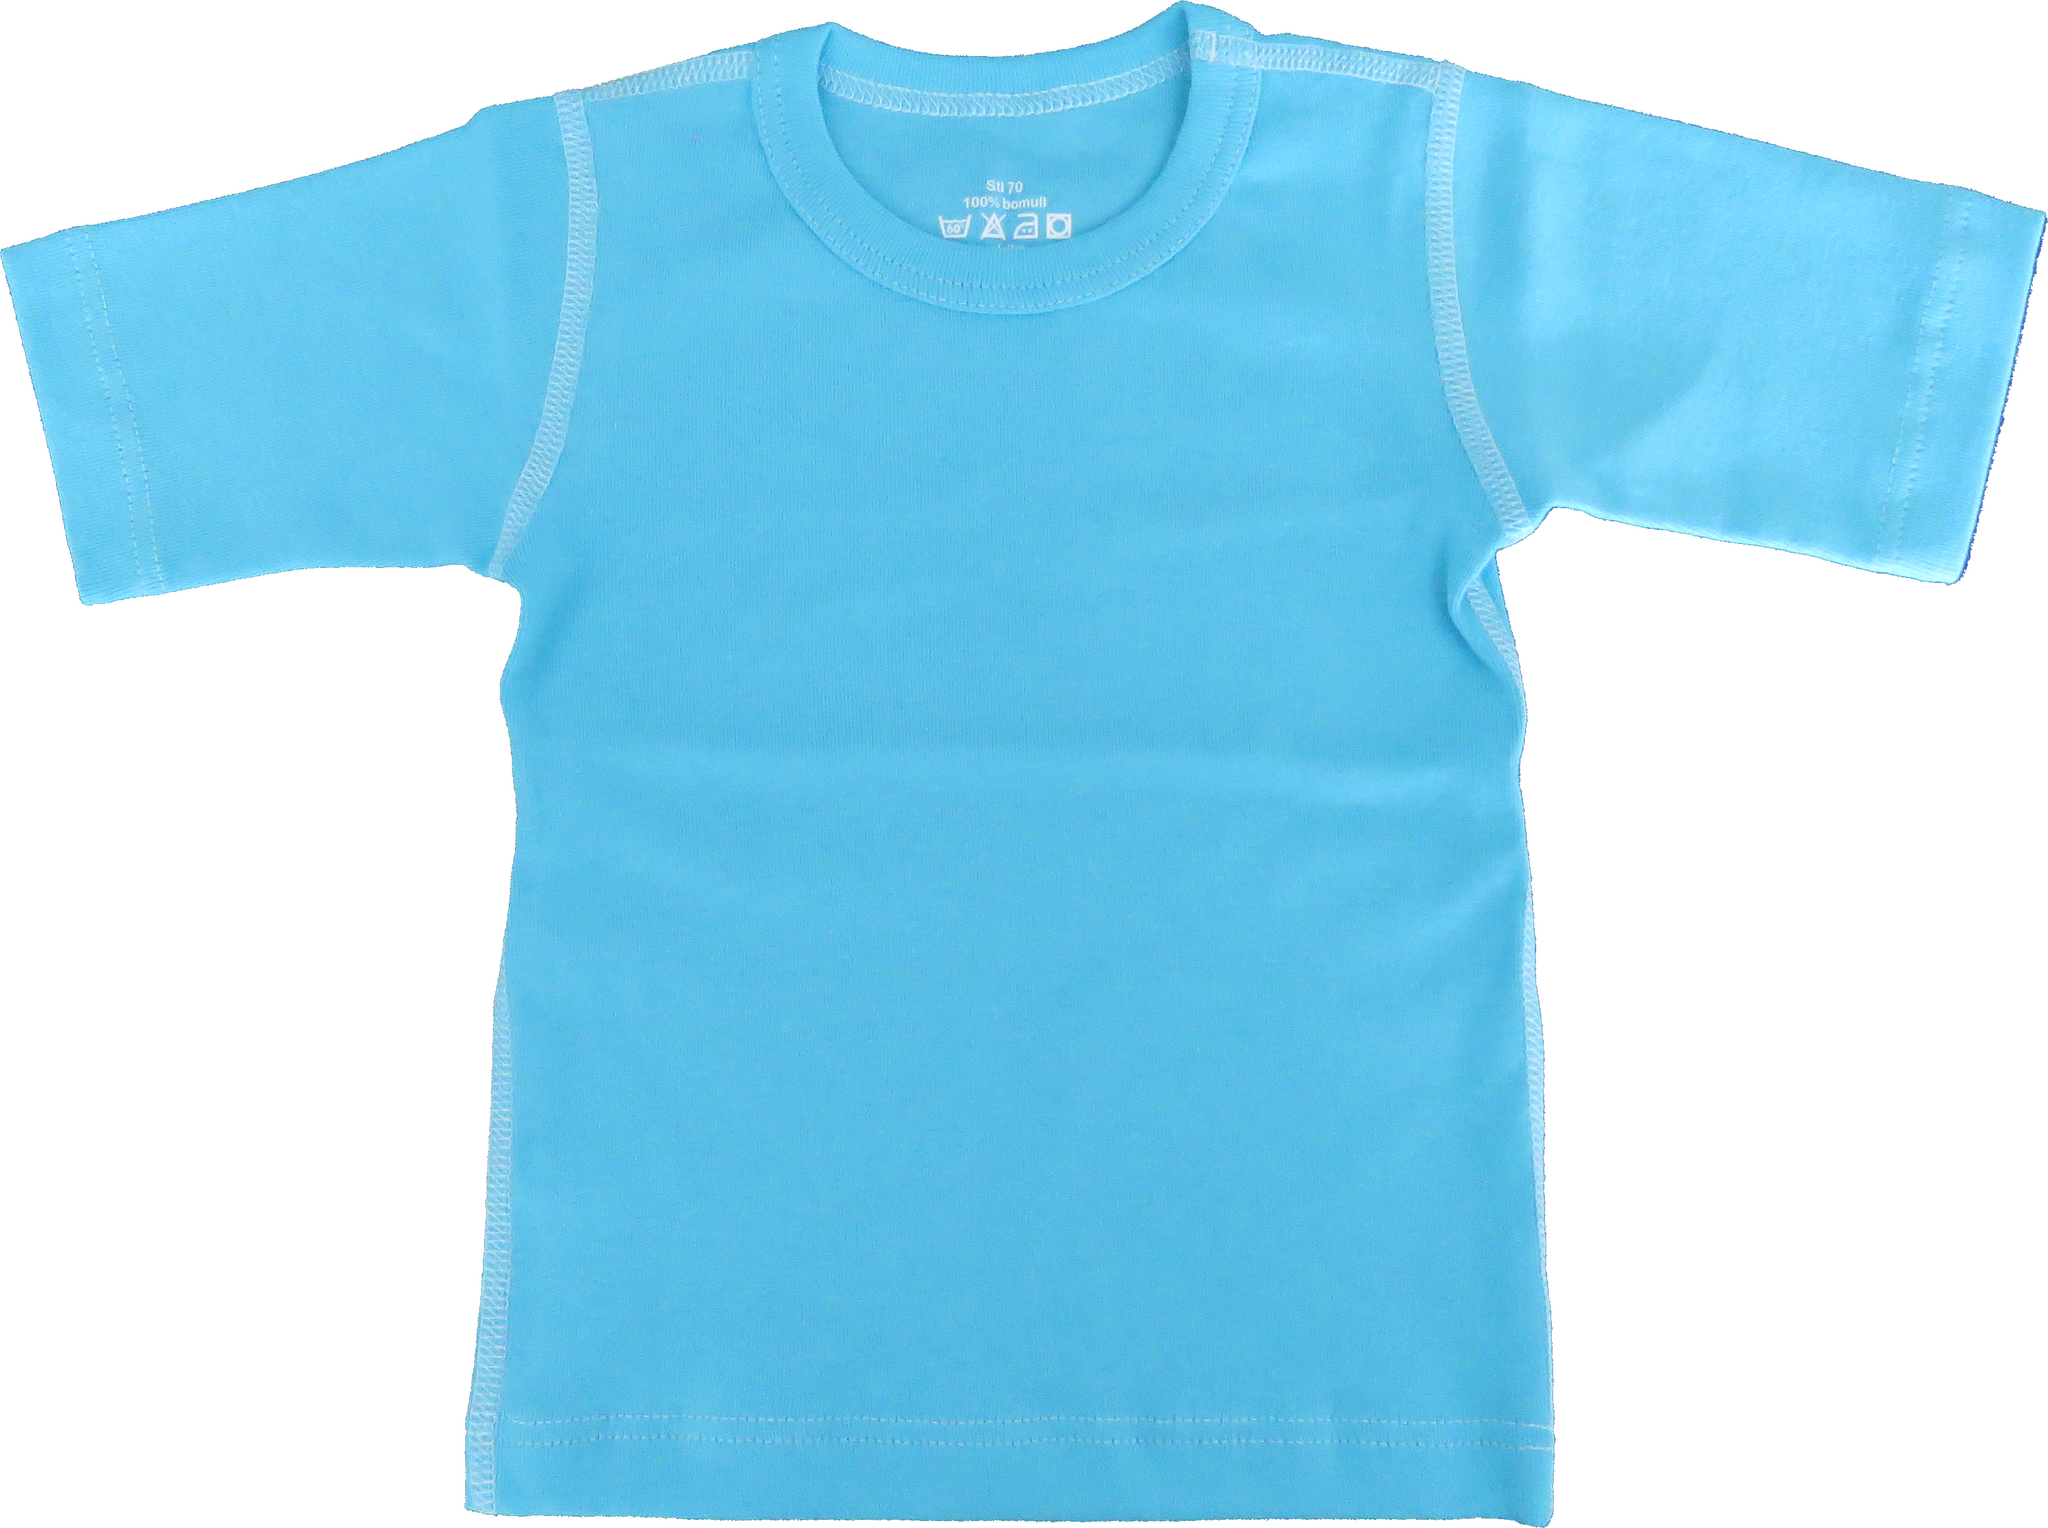 Basic t-shirt kortärmad turkose 70/86cl